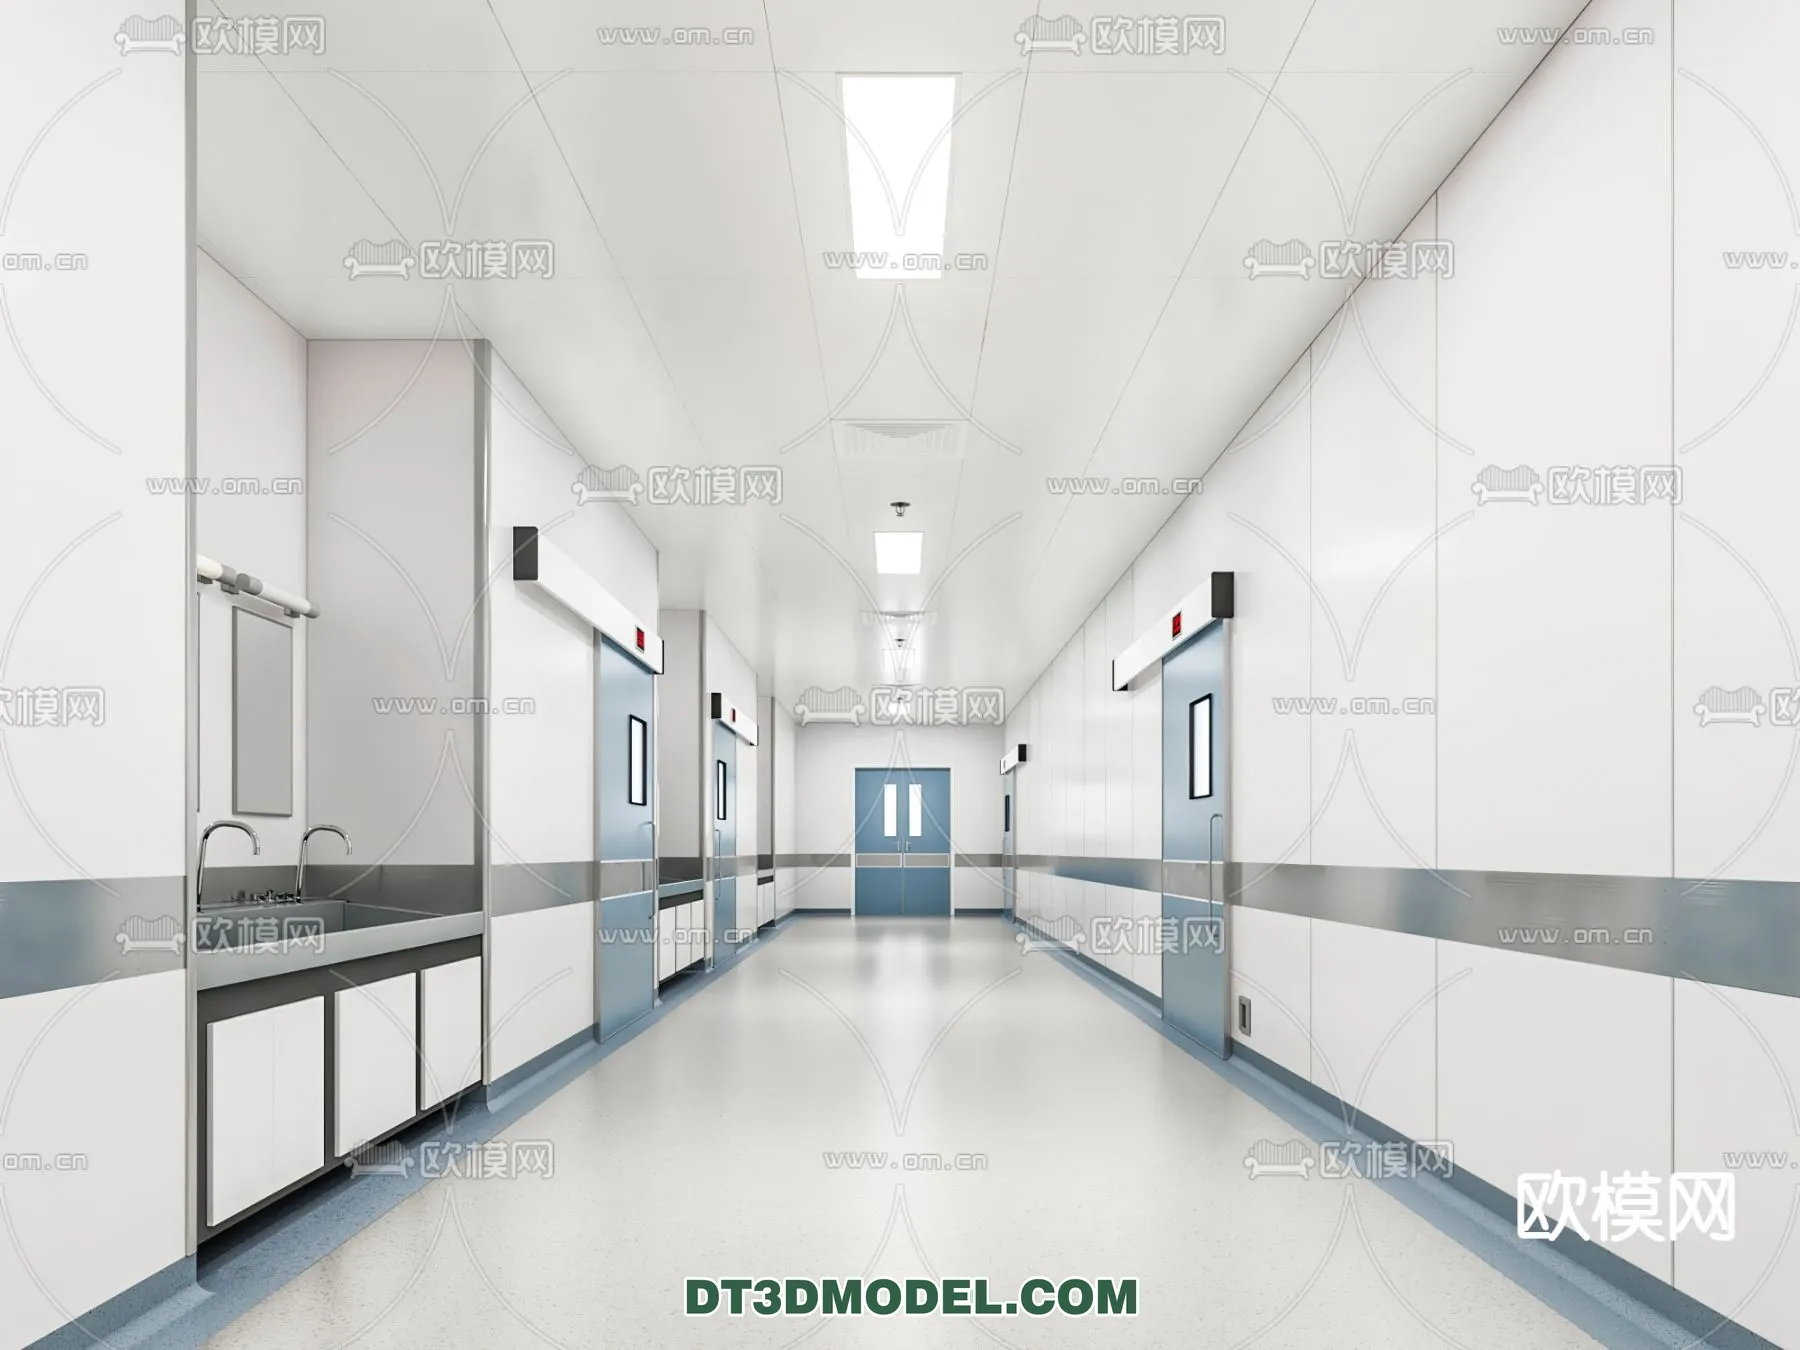 HOSPITAL 3D SCENES – MODERN – 0132